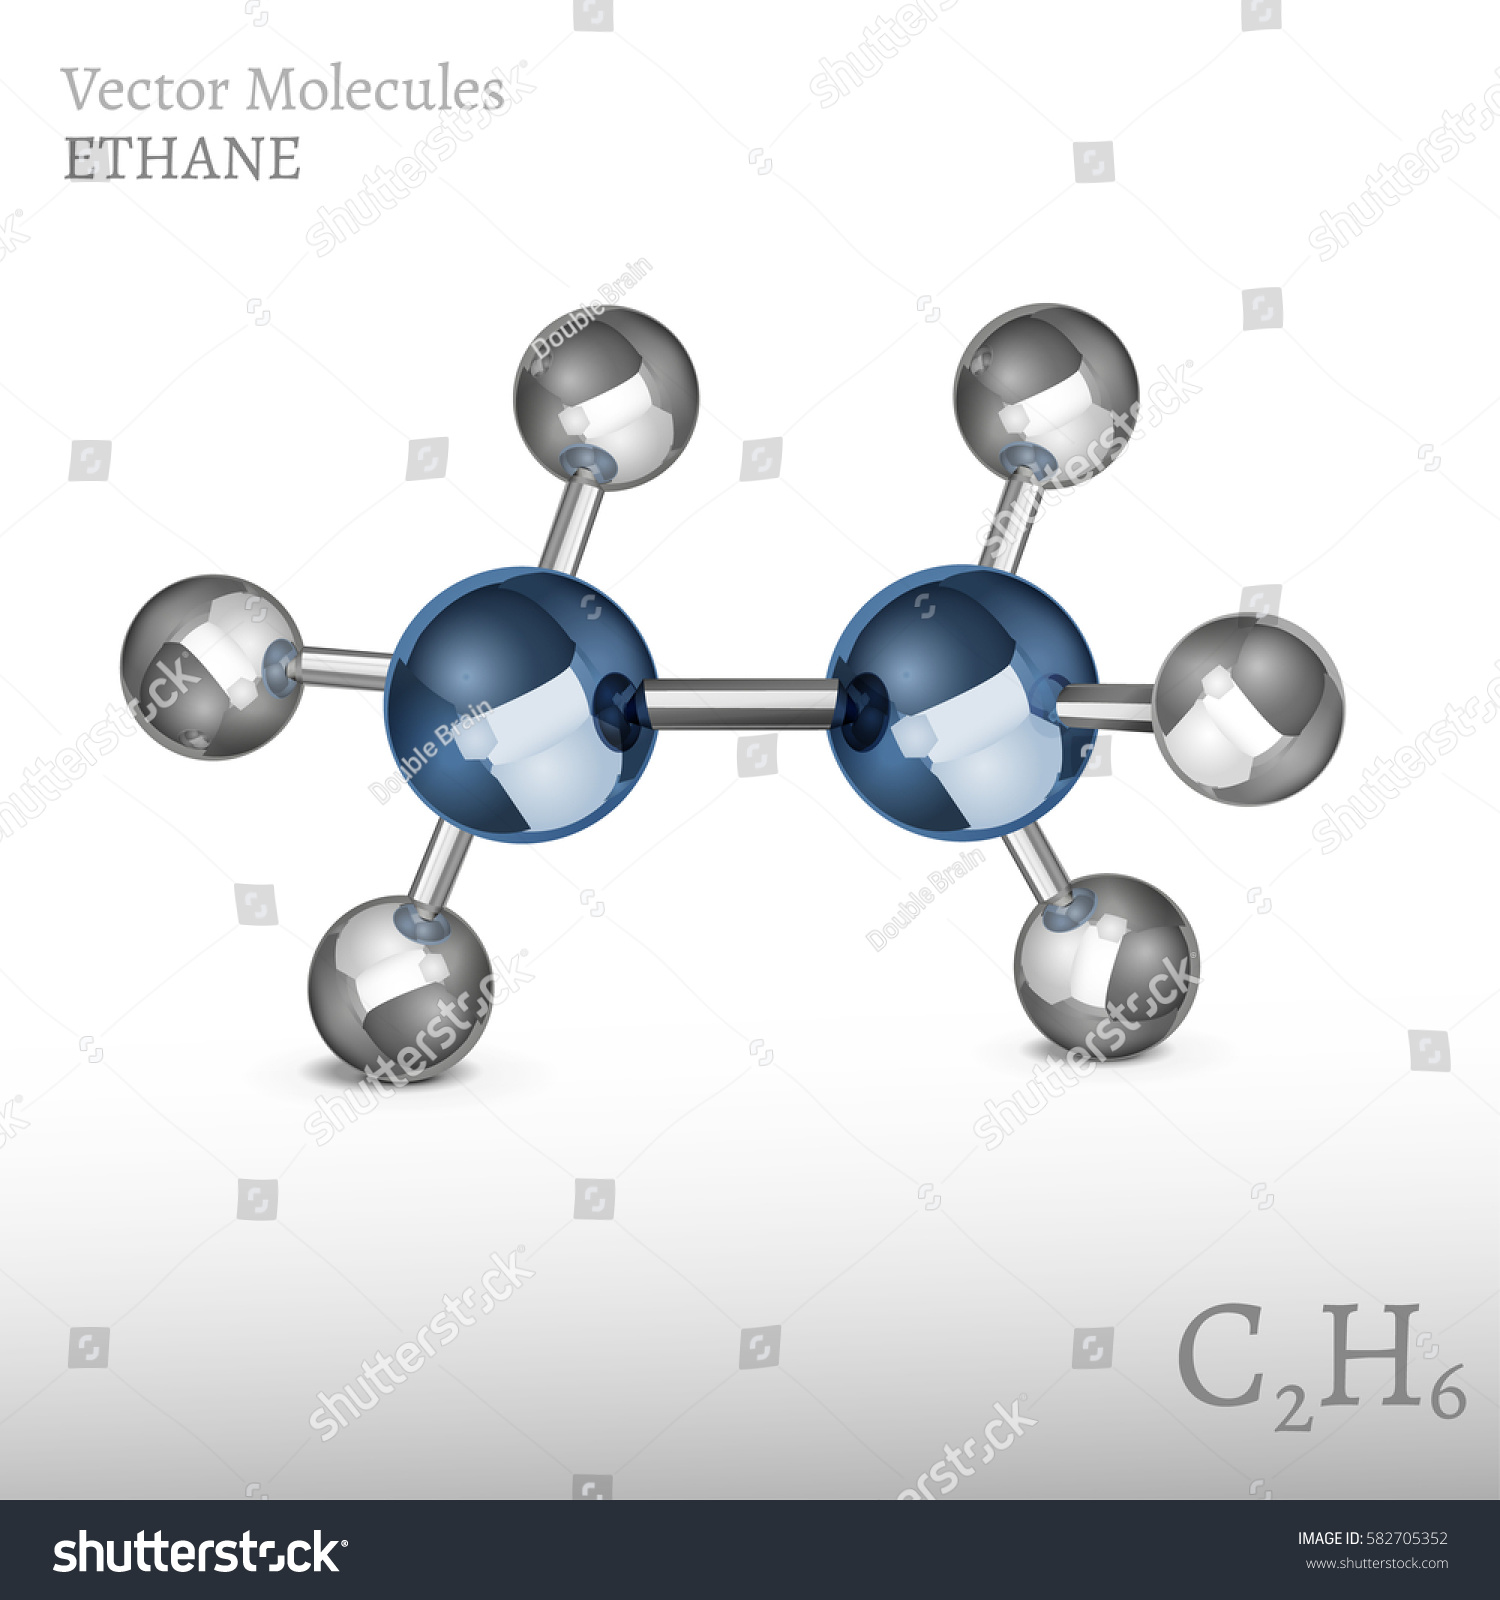 Ethane molecule in 3D style. C2H6 vector - Royalty Free Stock Vector ...